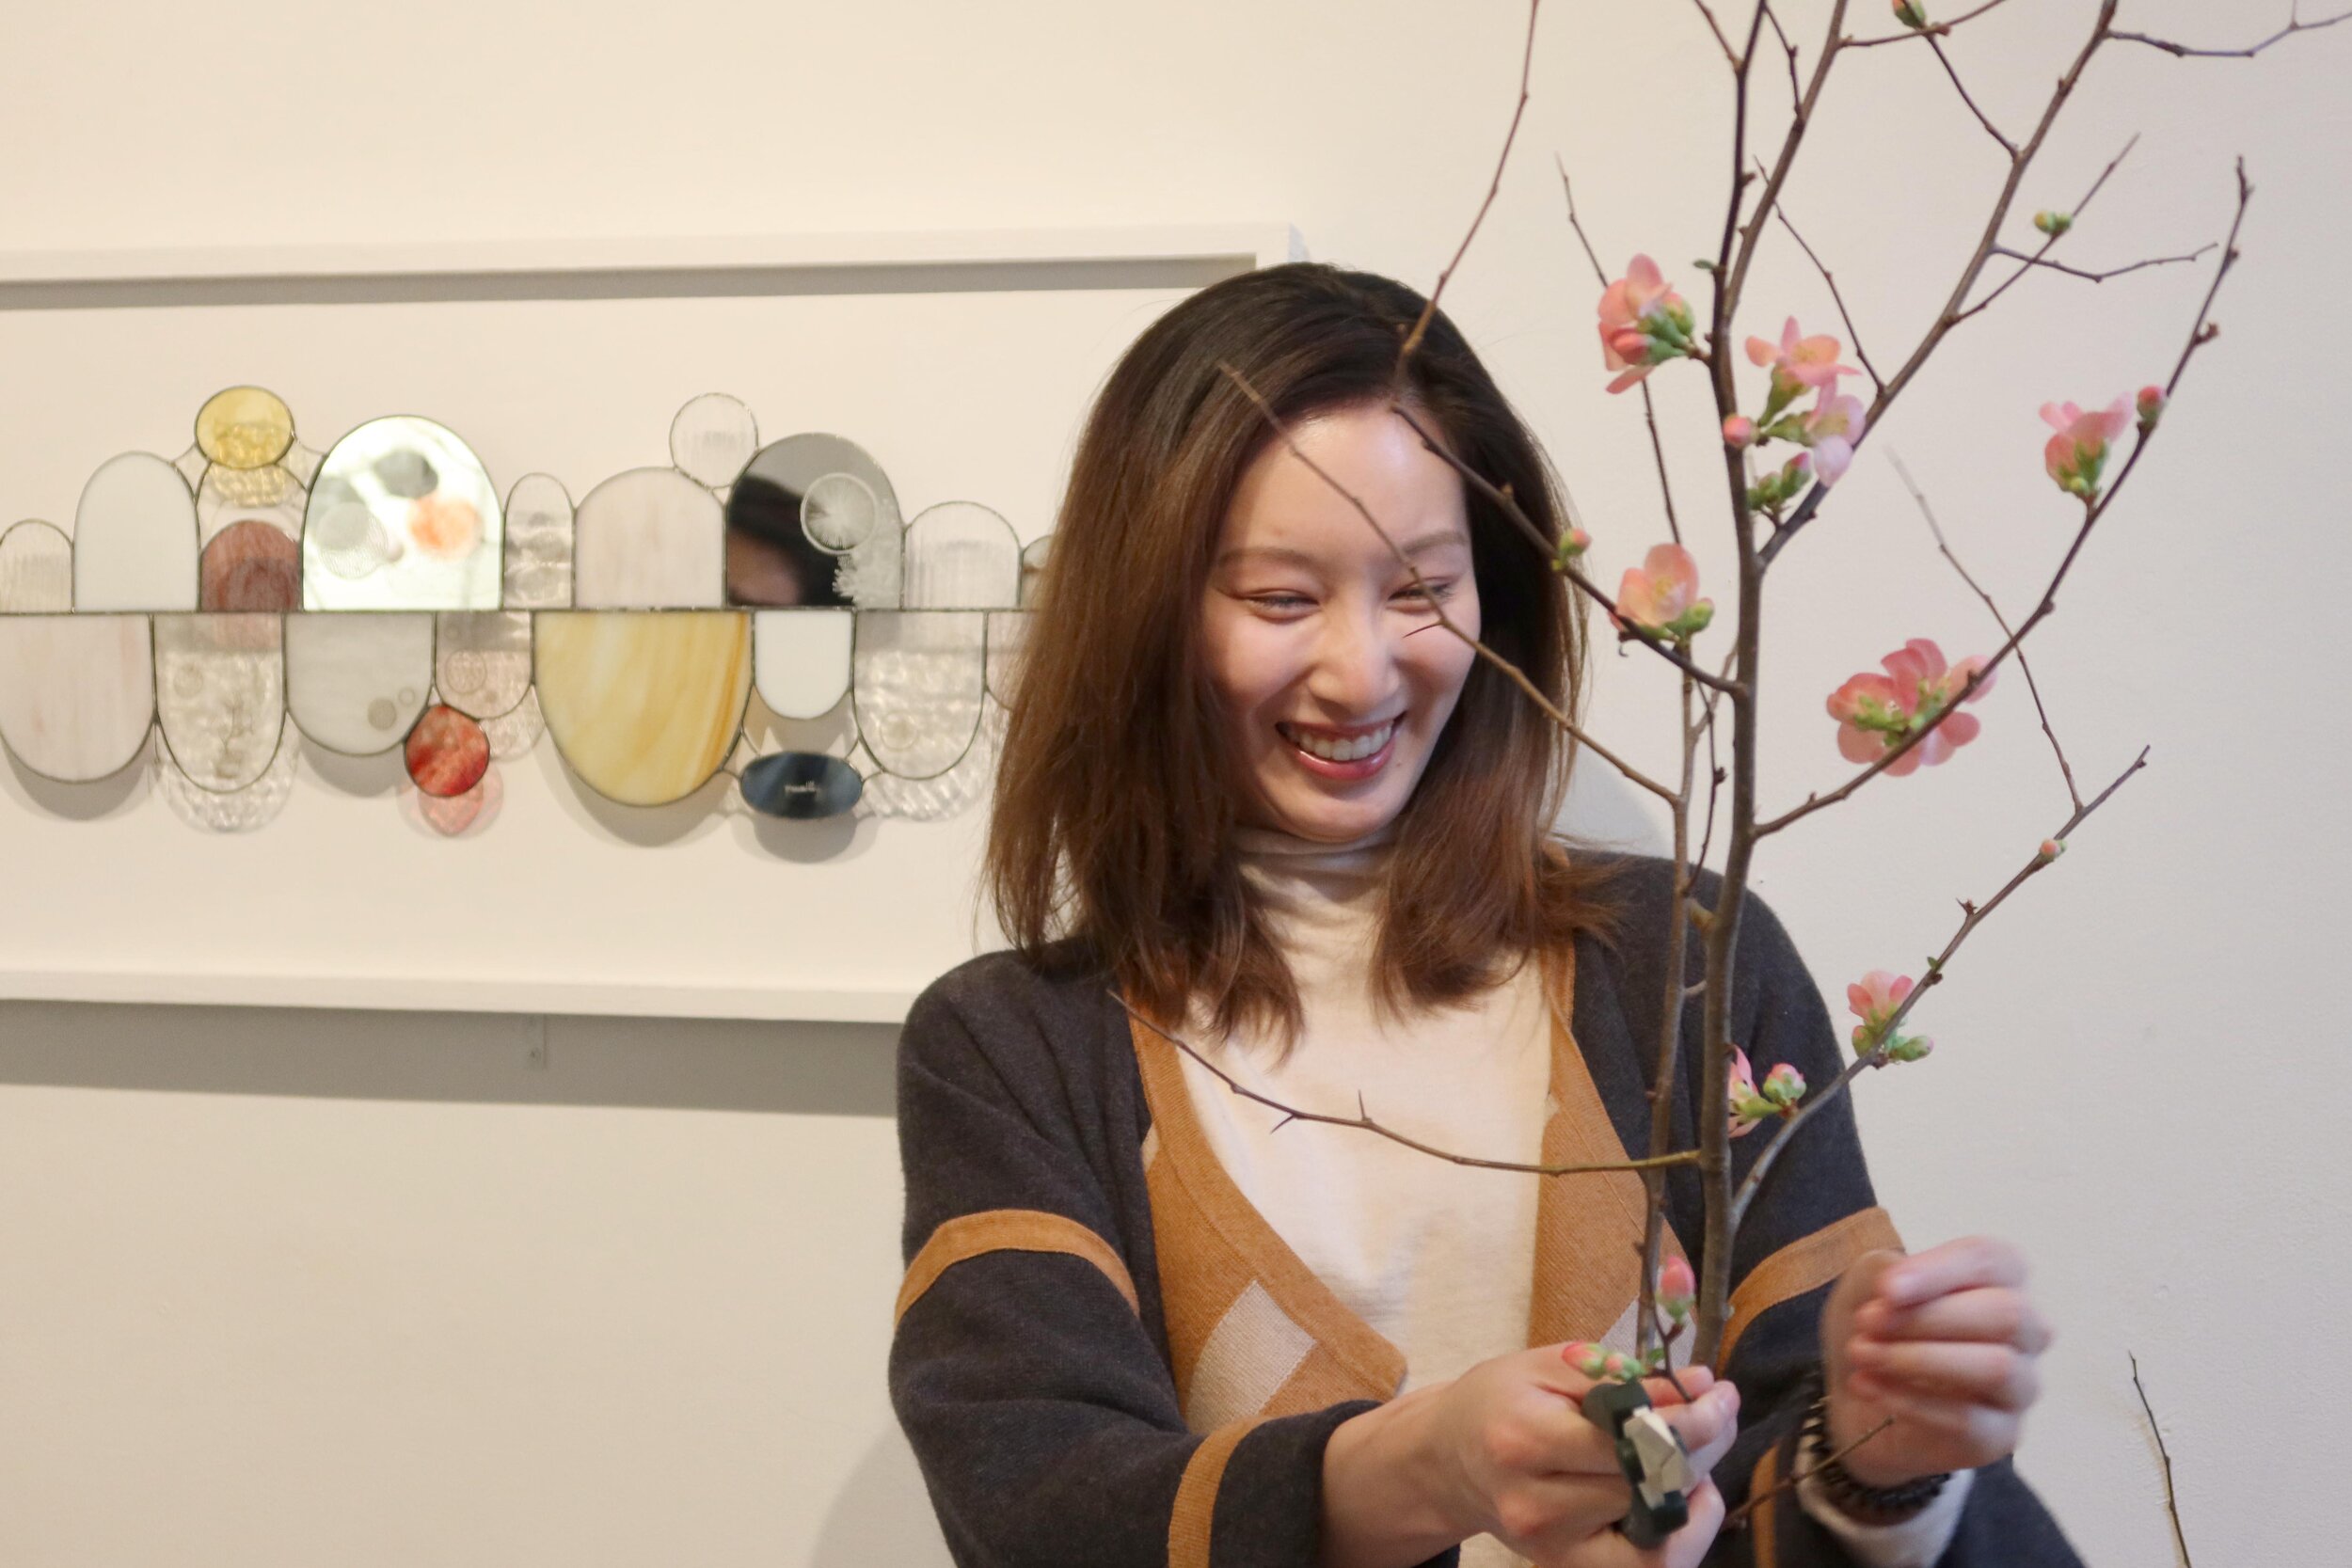   A Taste of Ikebana  at Fou Gallery (12.14.2019), photo by Jingxin Hu, courtesy Fou Gallery. 